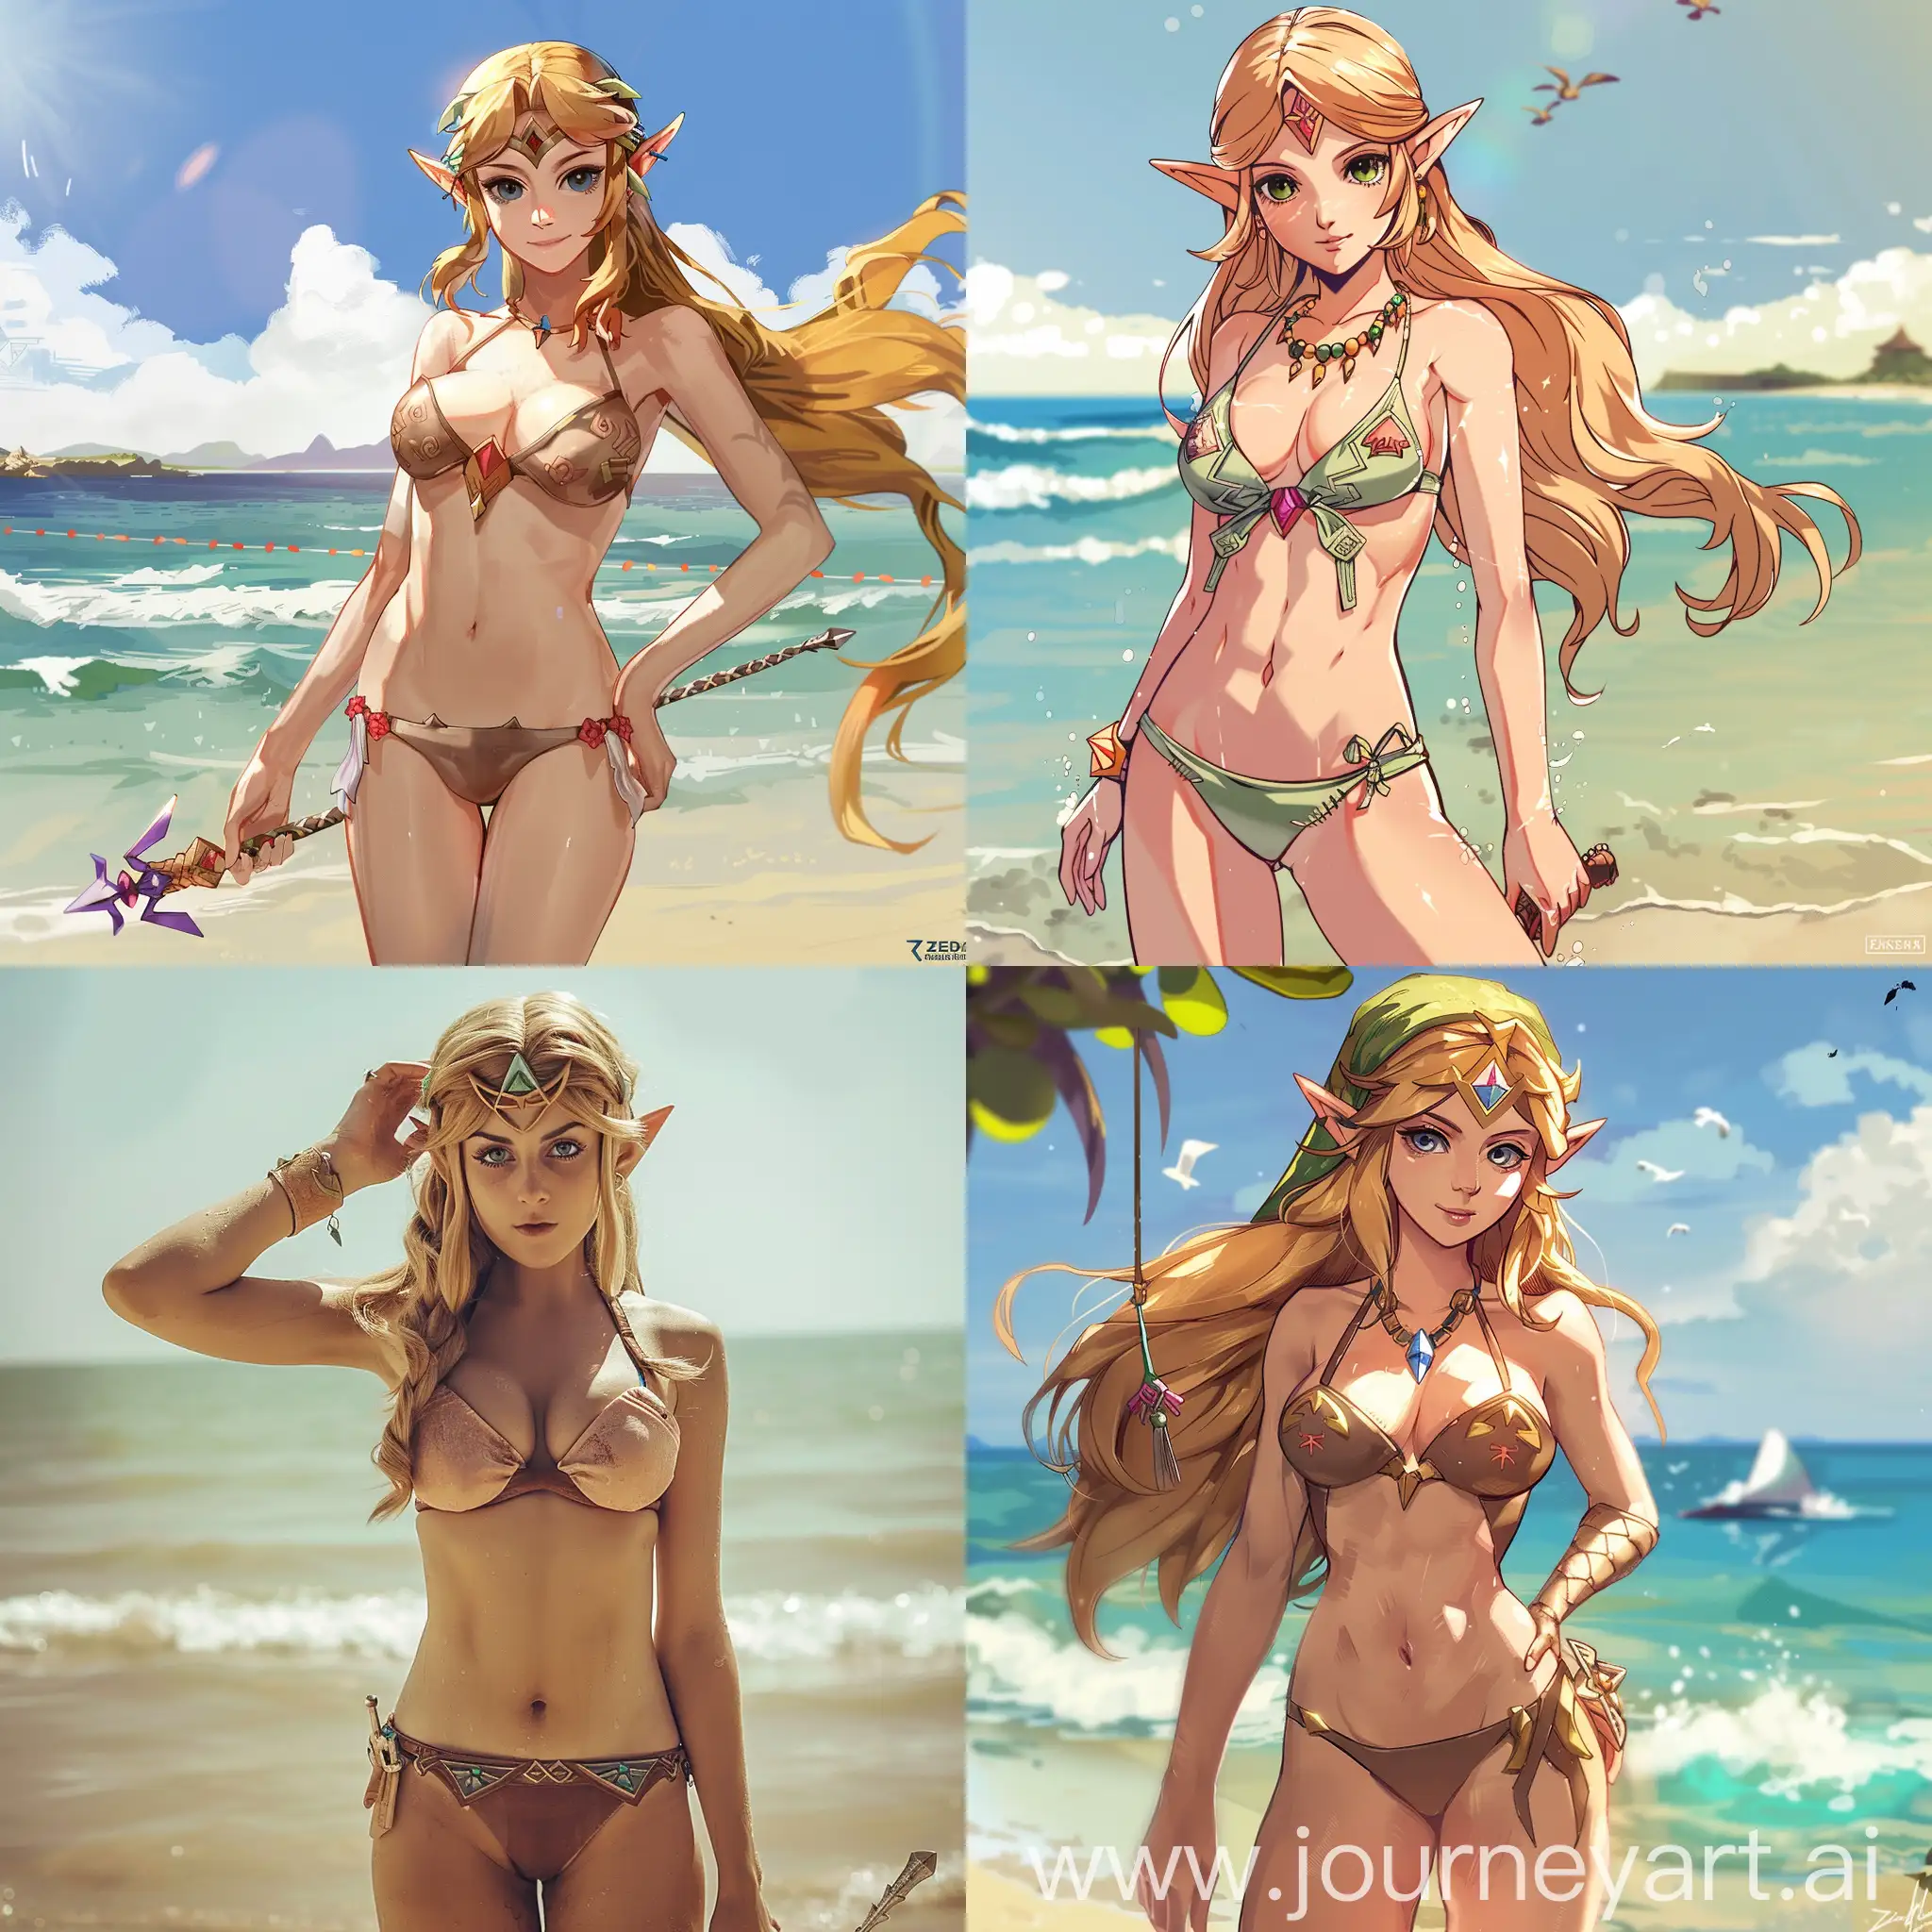 Princess-Zelda-Relaxing-at-the-Beach-in-a-Bikini